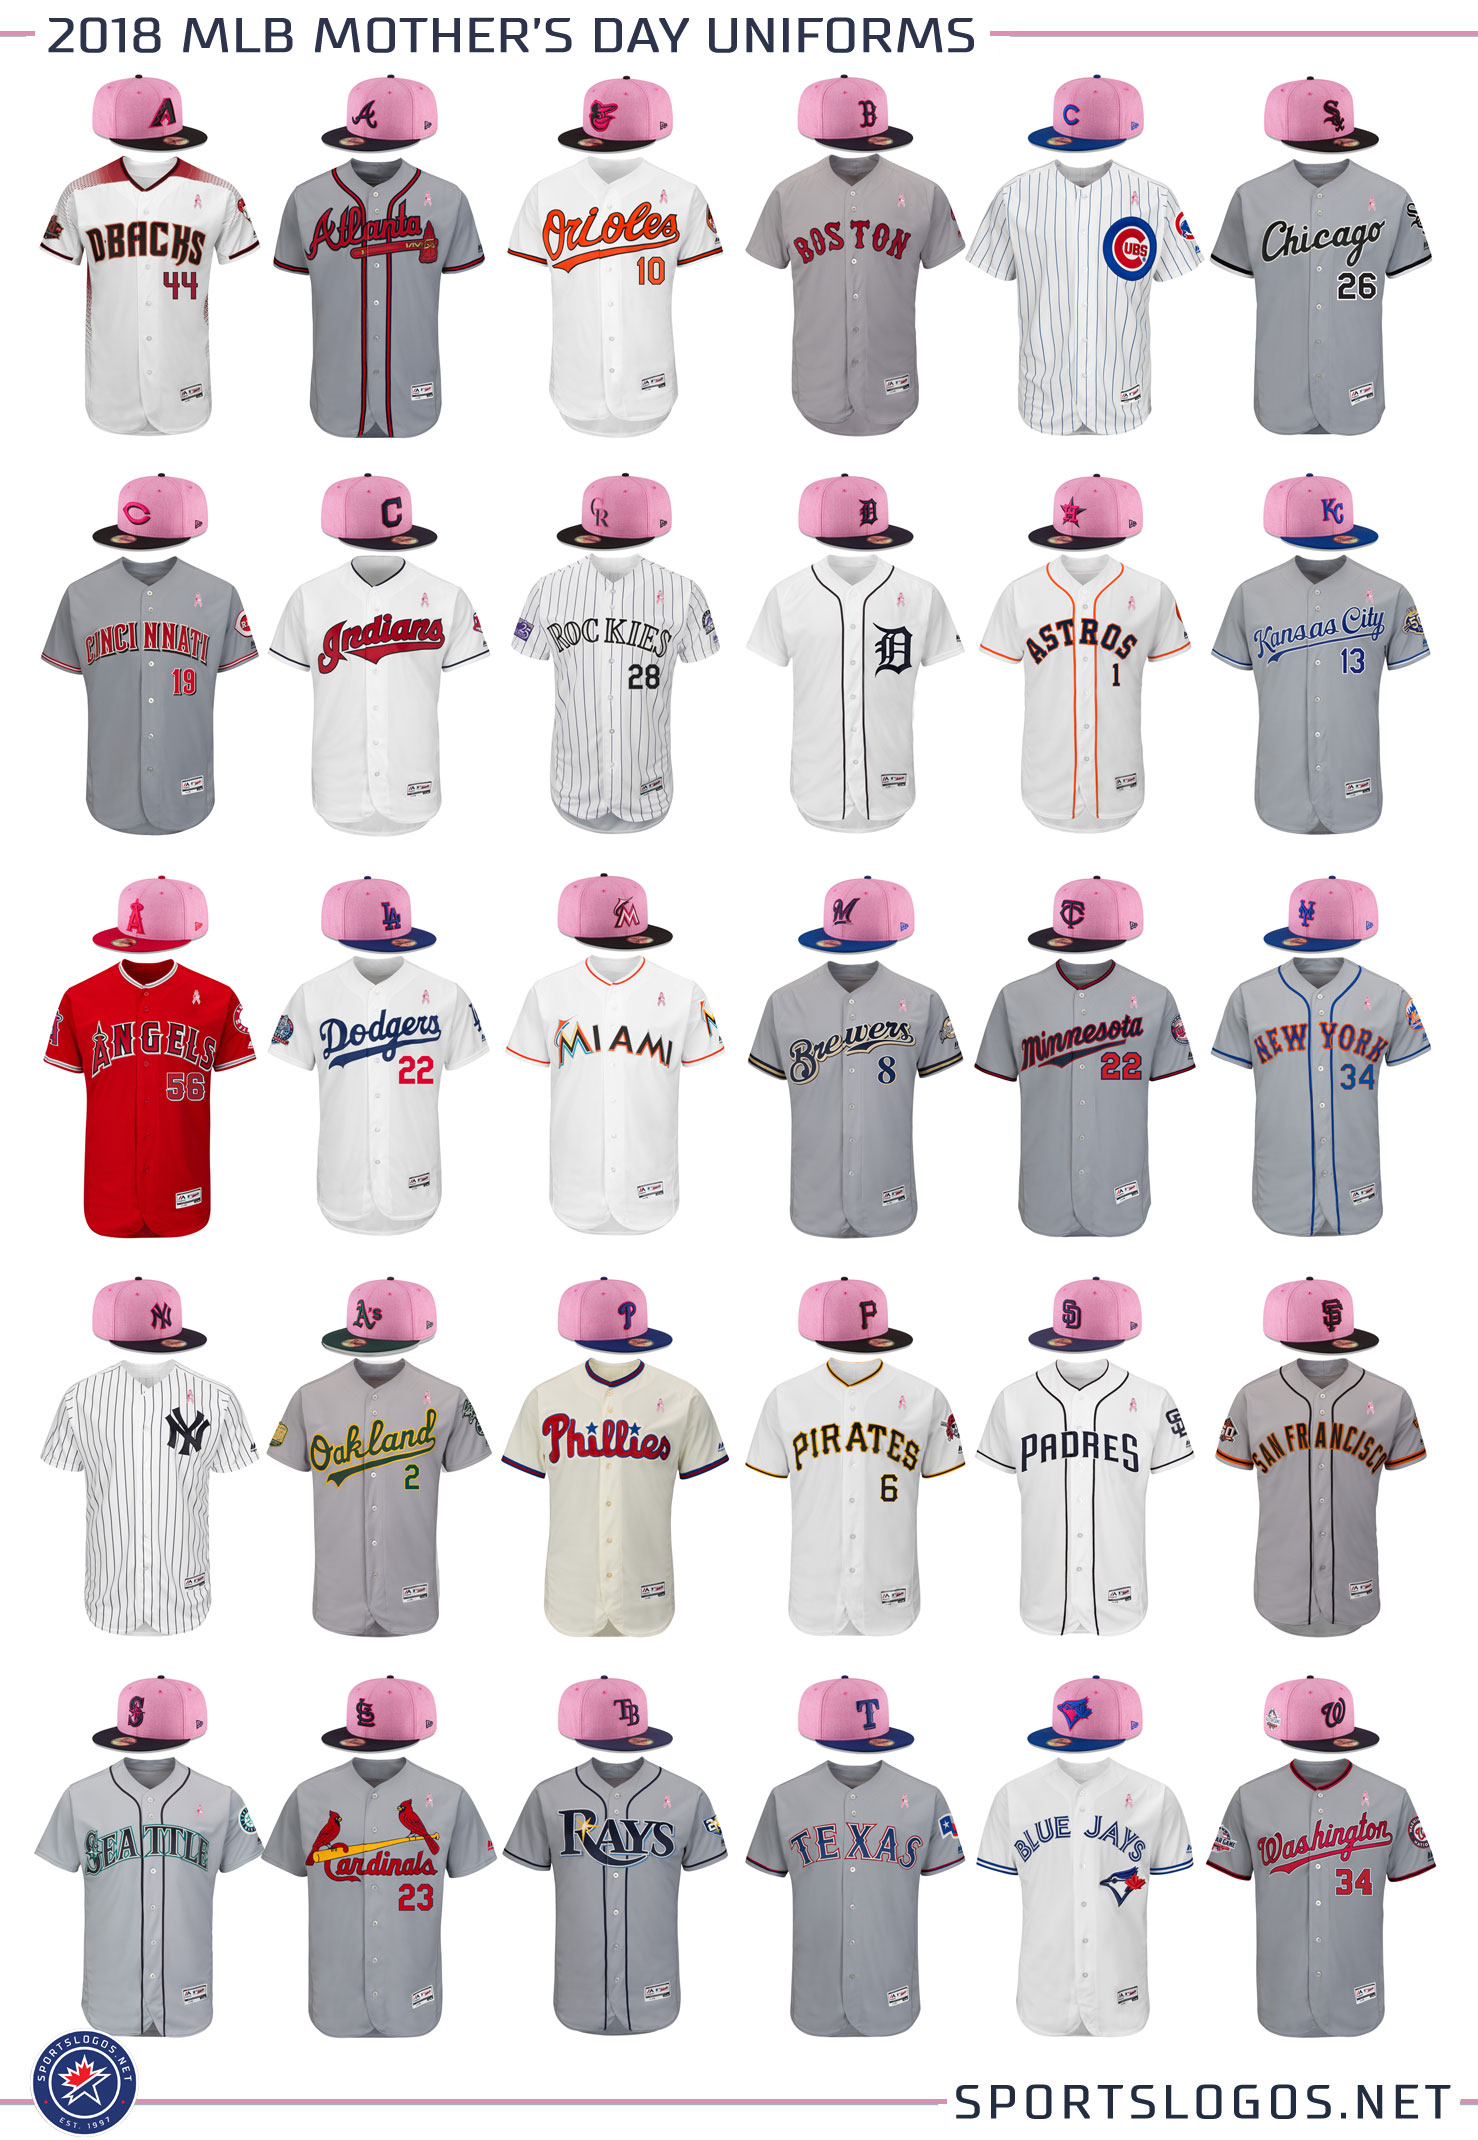 For Mom, All MLB Teams Wearing Pink – SportsLogos.Net News